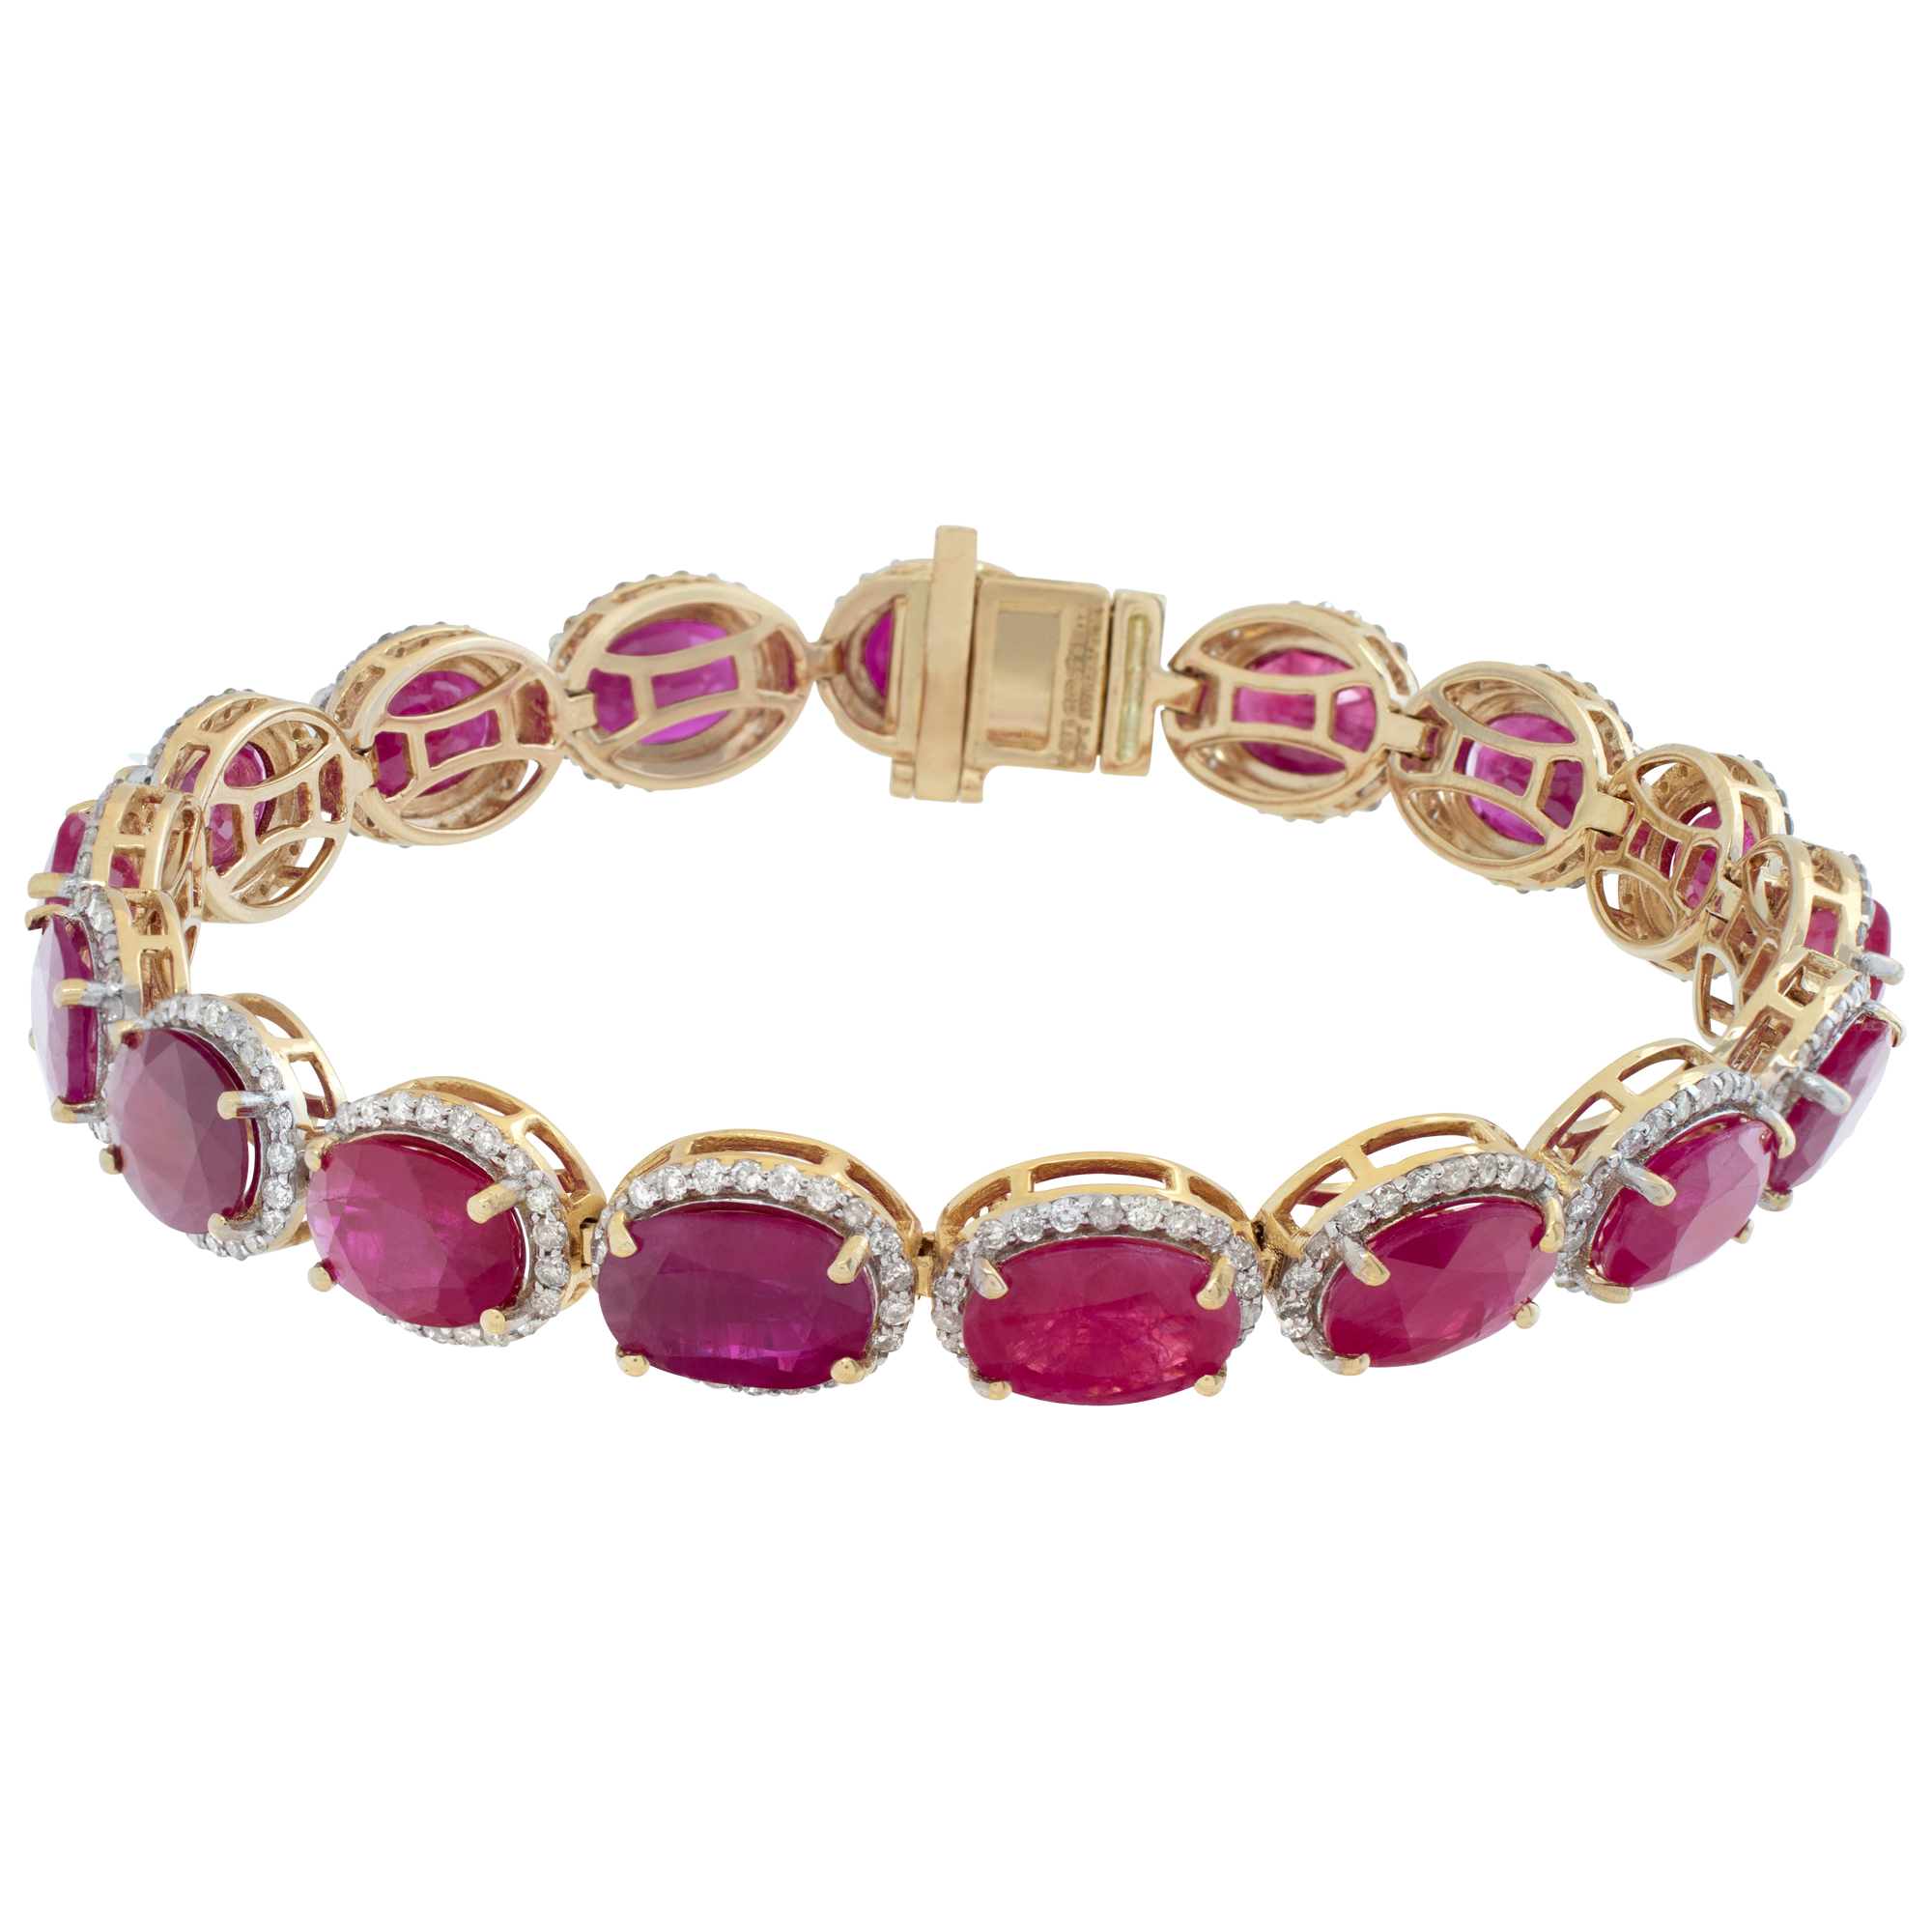 Burma ruby bracelet with diamond halo in 14k yellow gold settings (Stones)